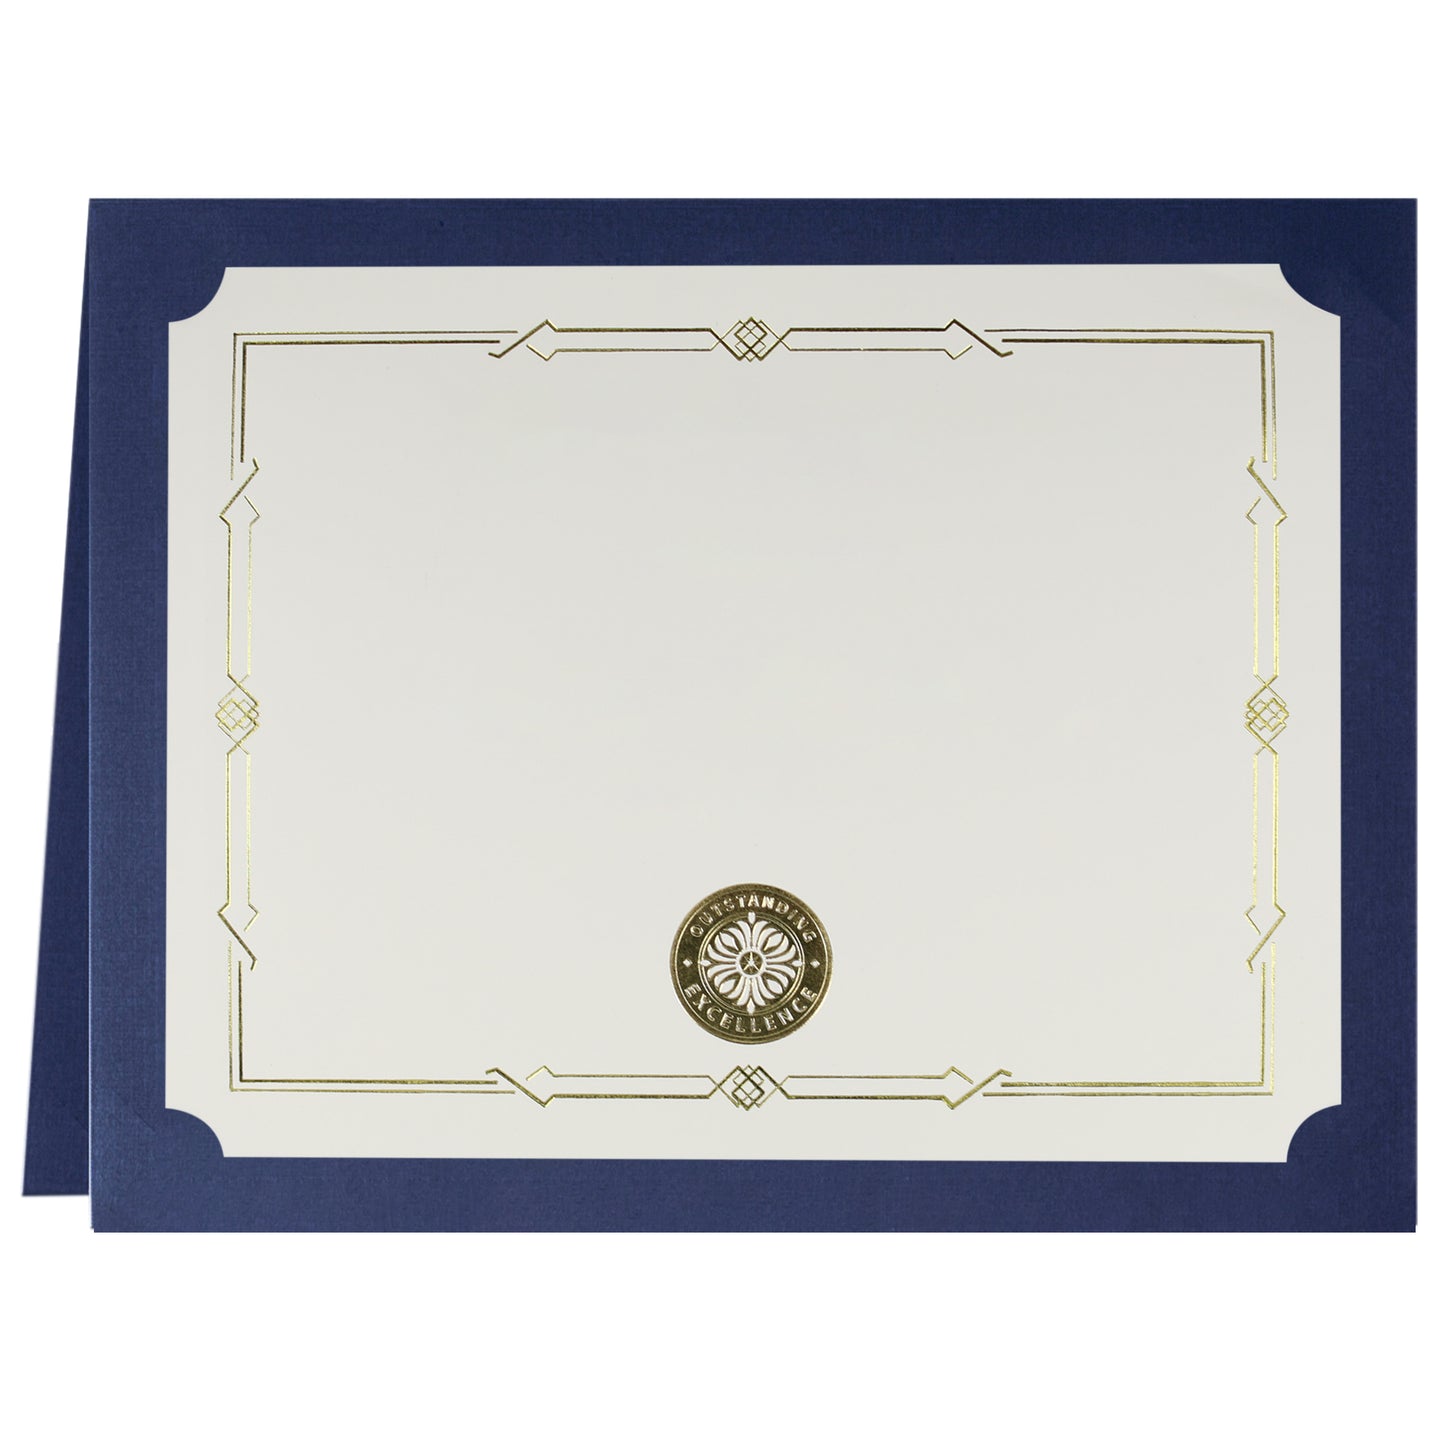 St. James® Certificate Holders/Document Covers/Diploma Holders, Navy Blue, Gold Foil Border, Linen Finish, Pack of 5, 83806